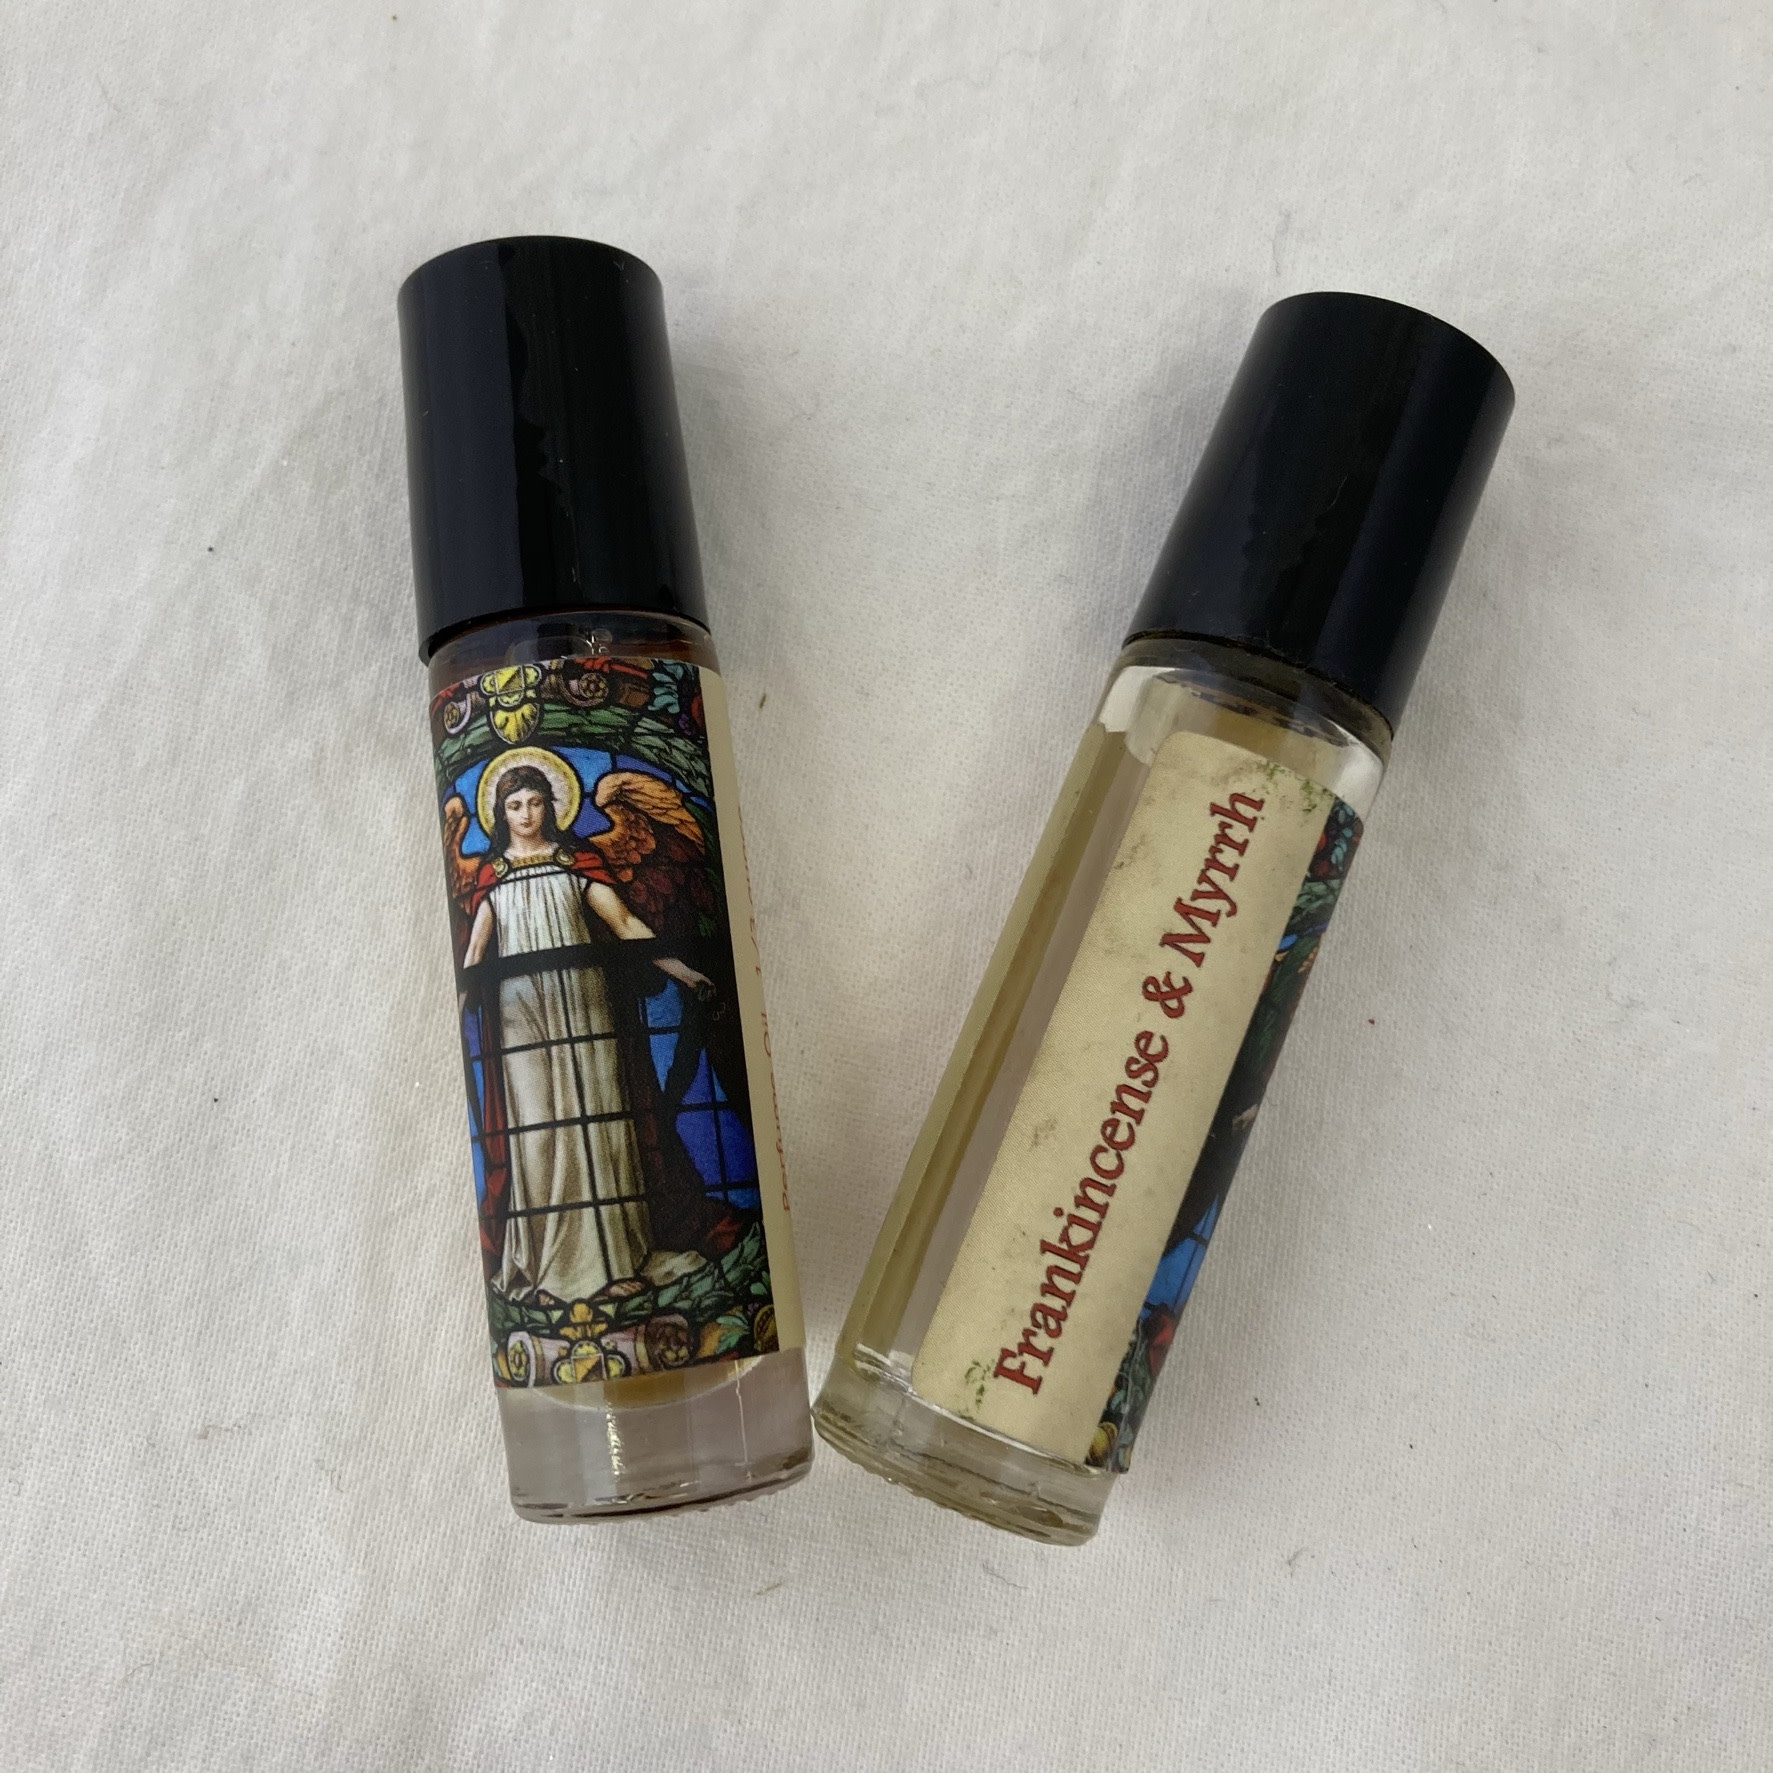 Frankincense and Myrrh Fragrance Oil